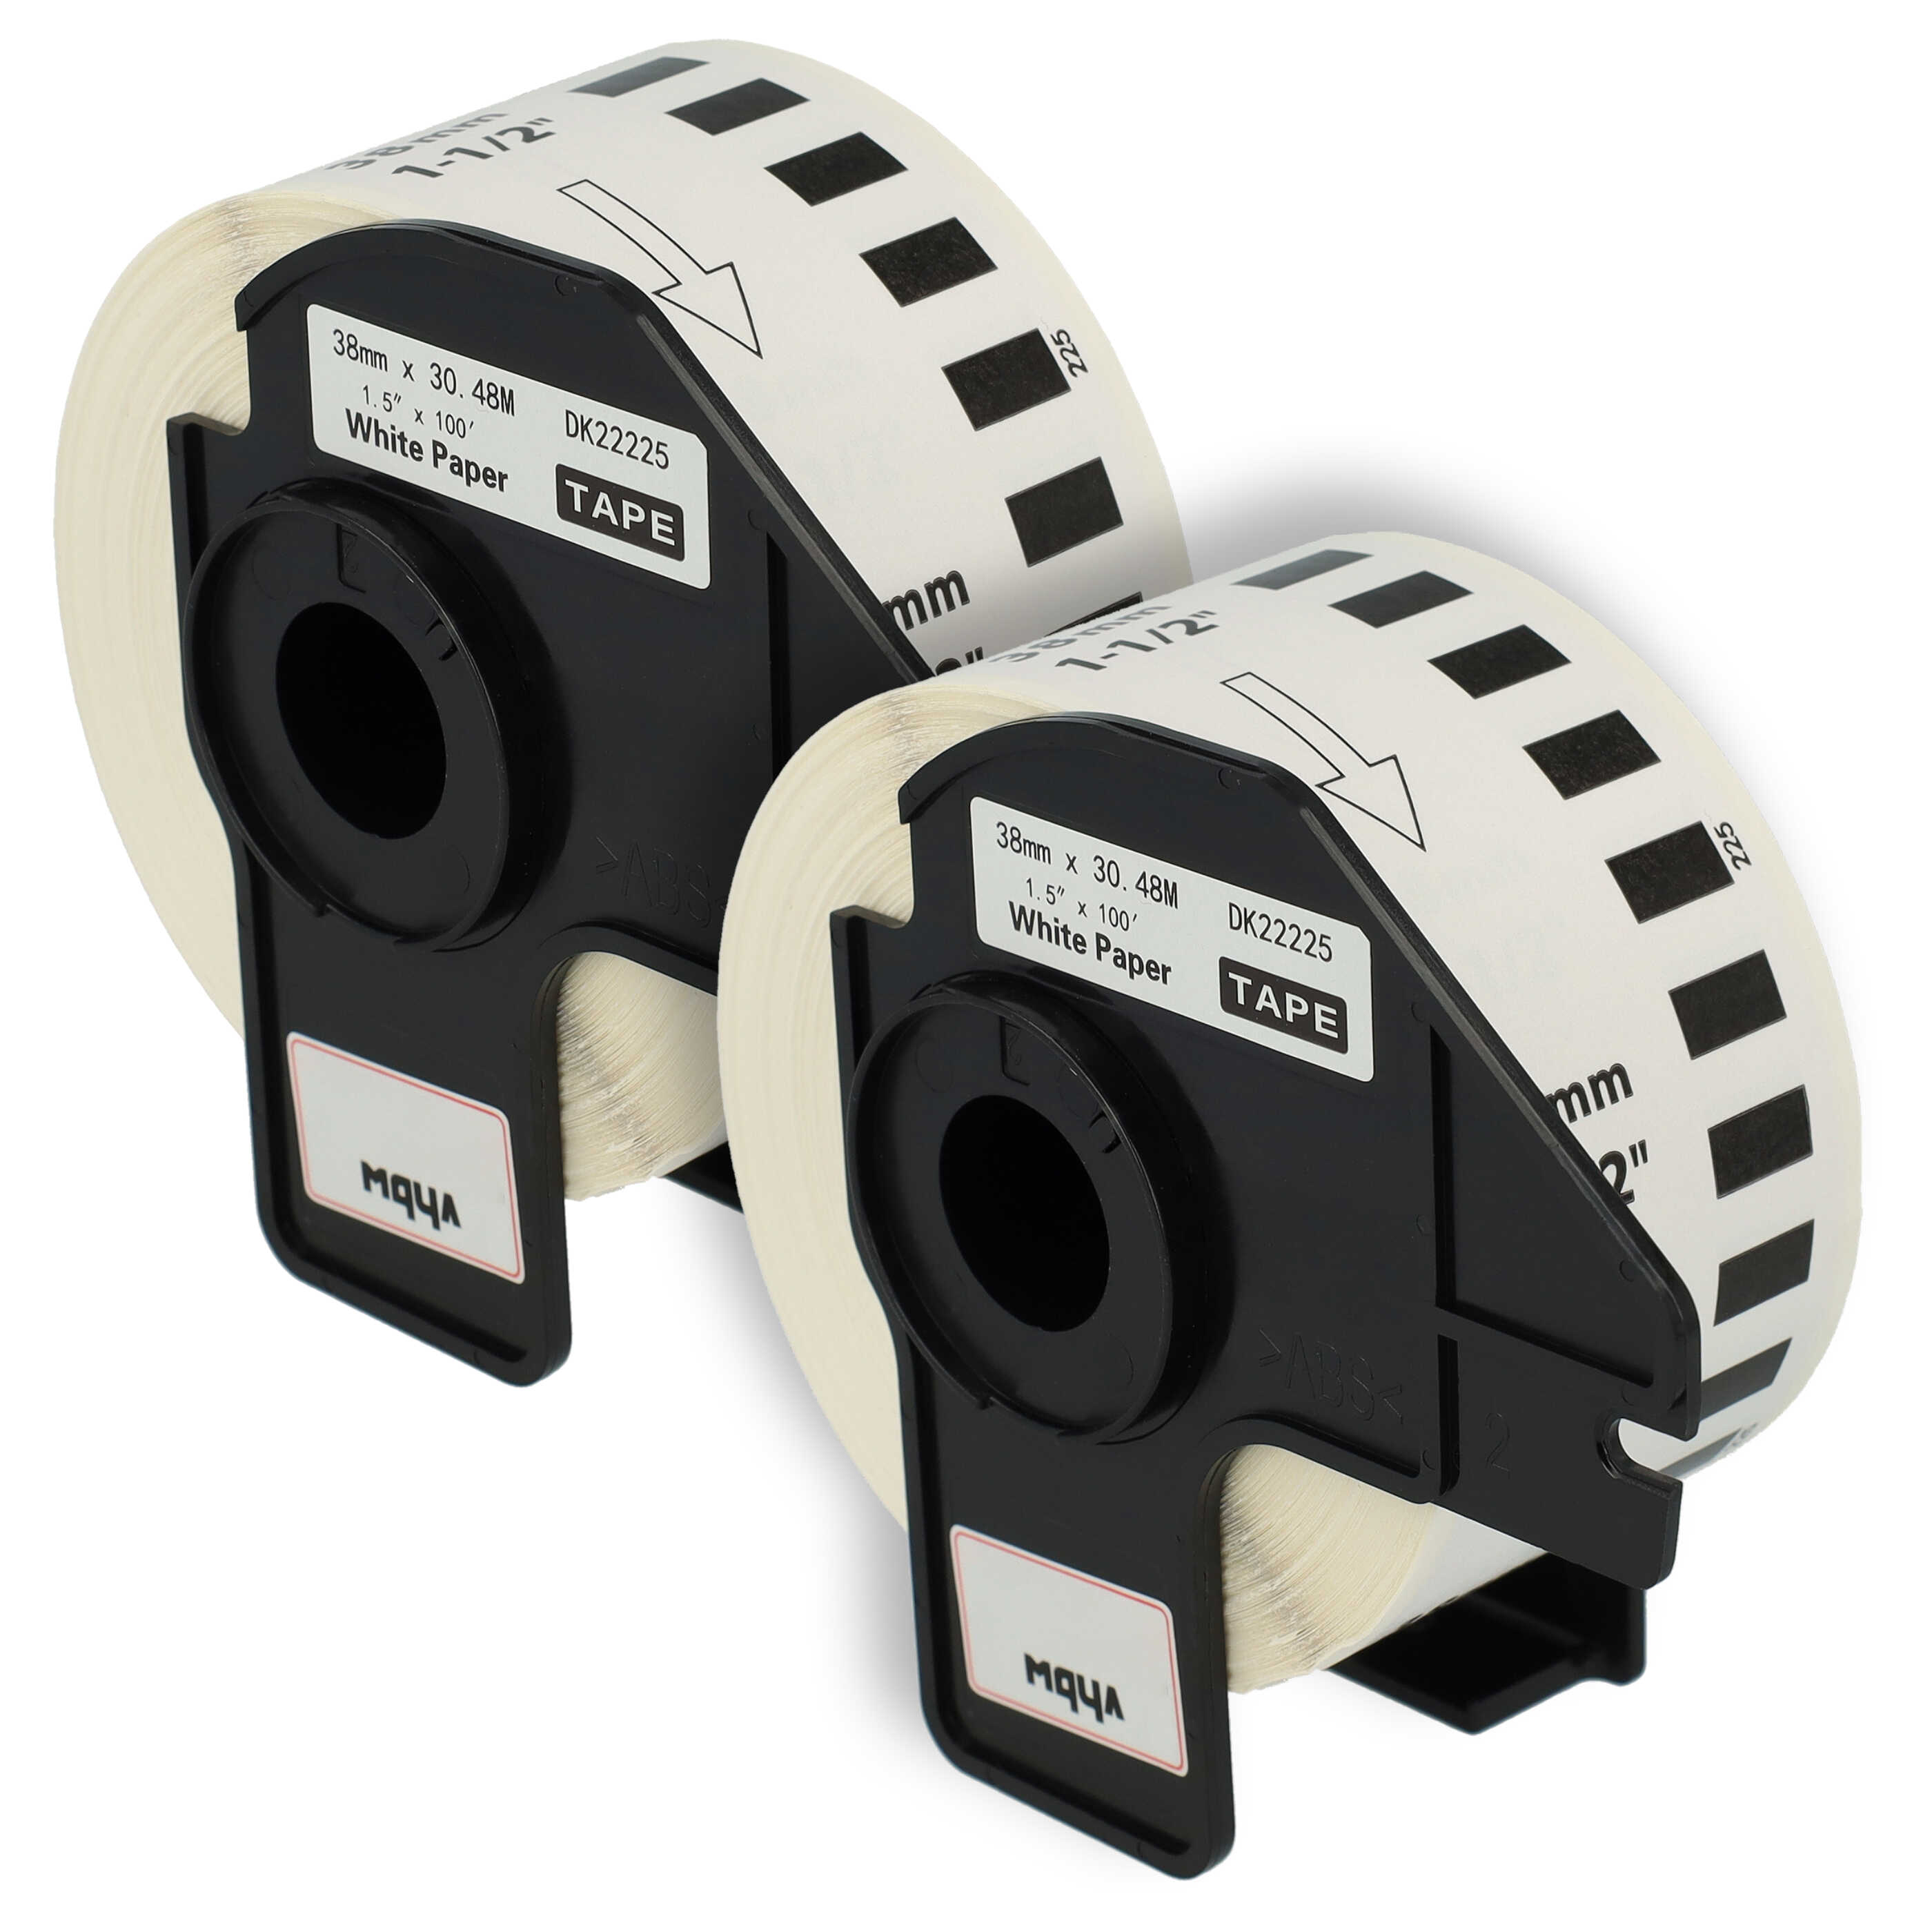 2x Etiquetas reemplaza Brother DK-22225 para impresora etiquetas - 38 mm x 30,48 m + soporte